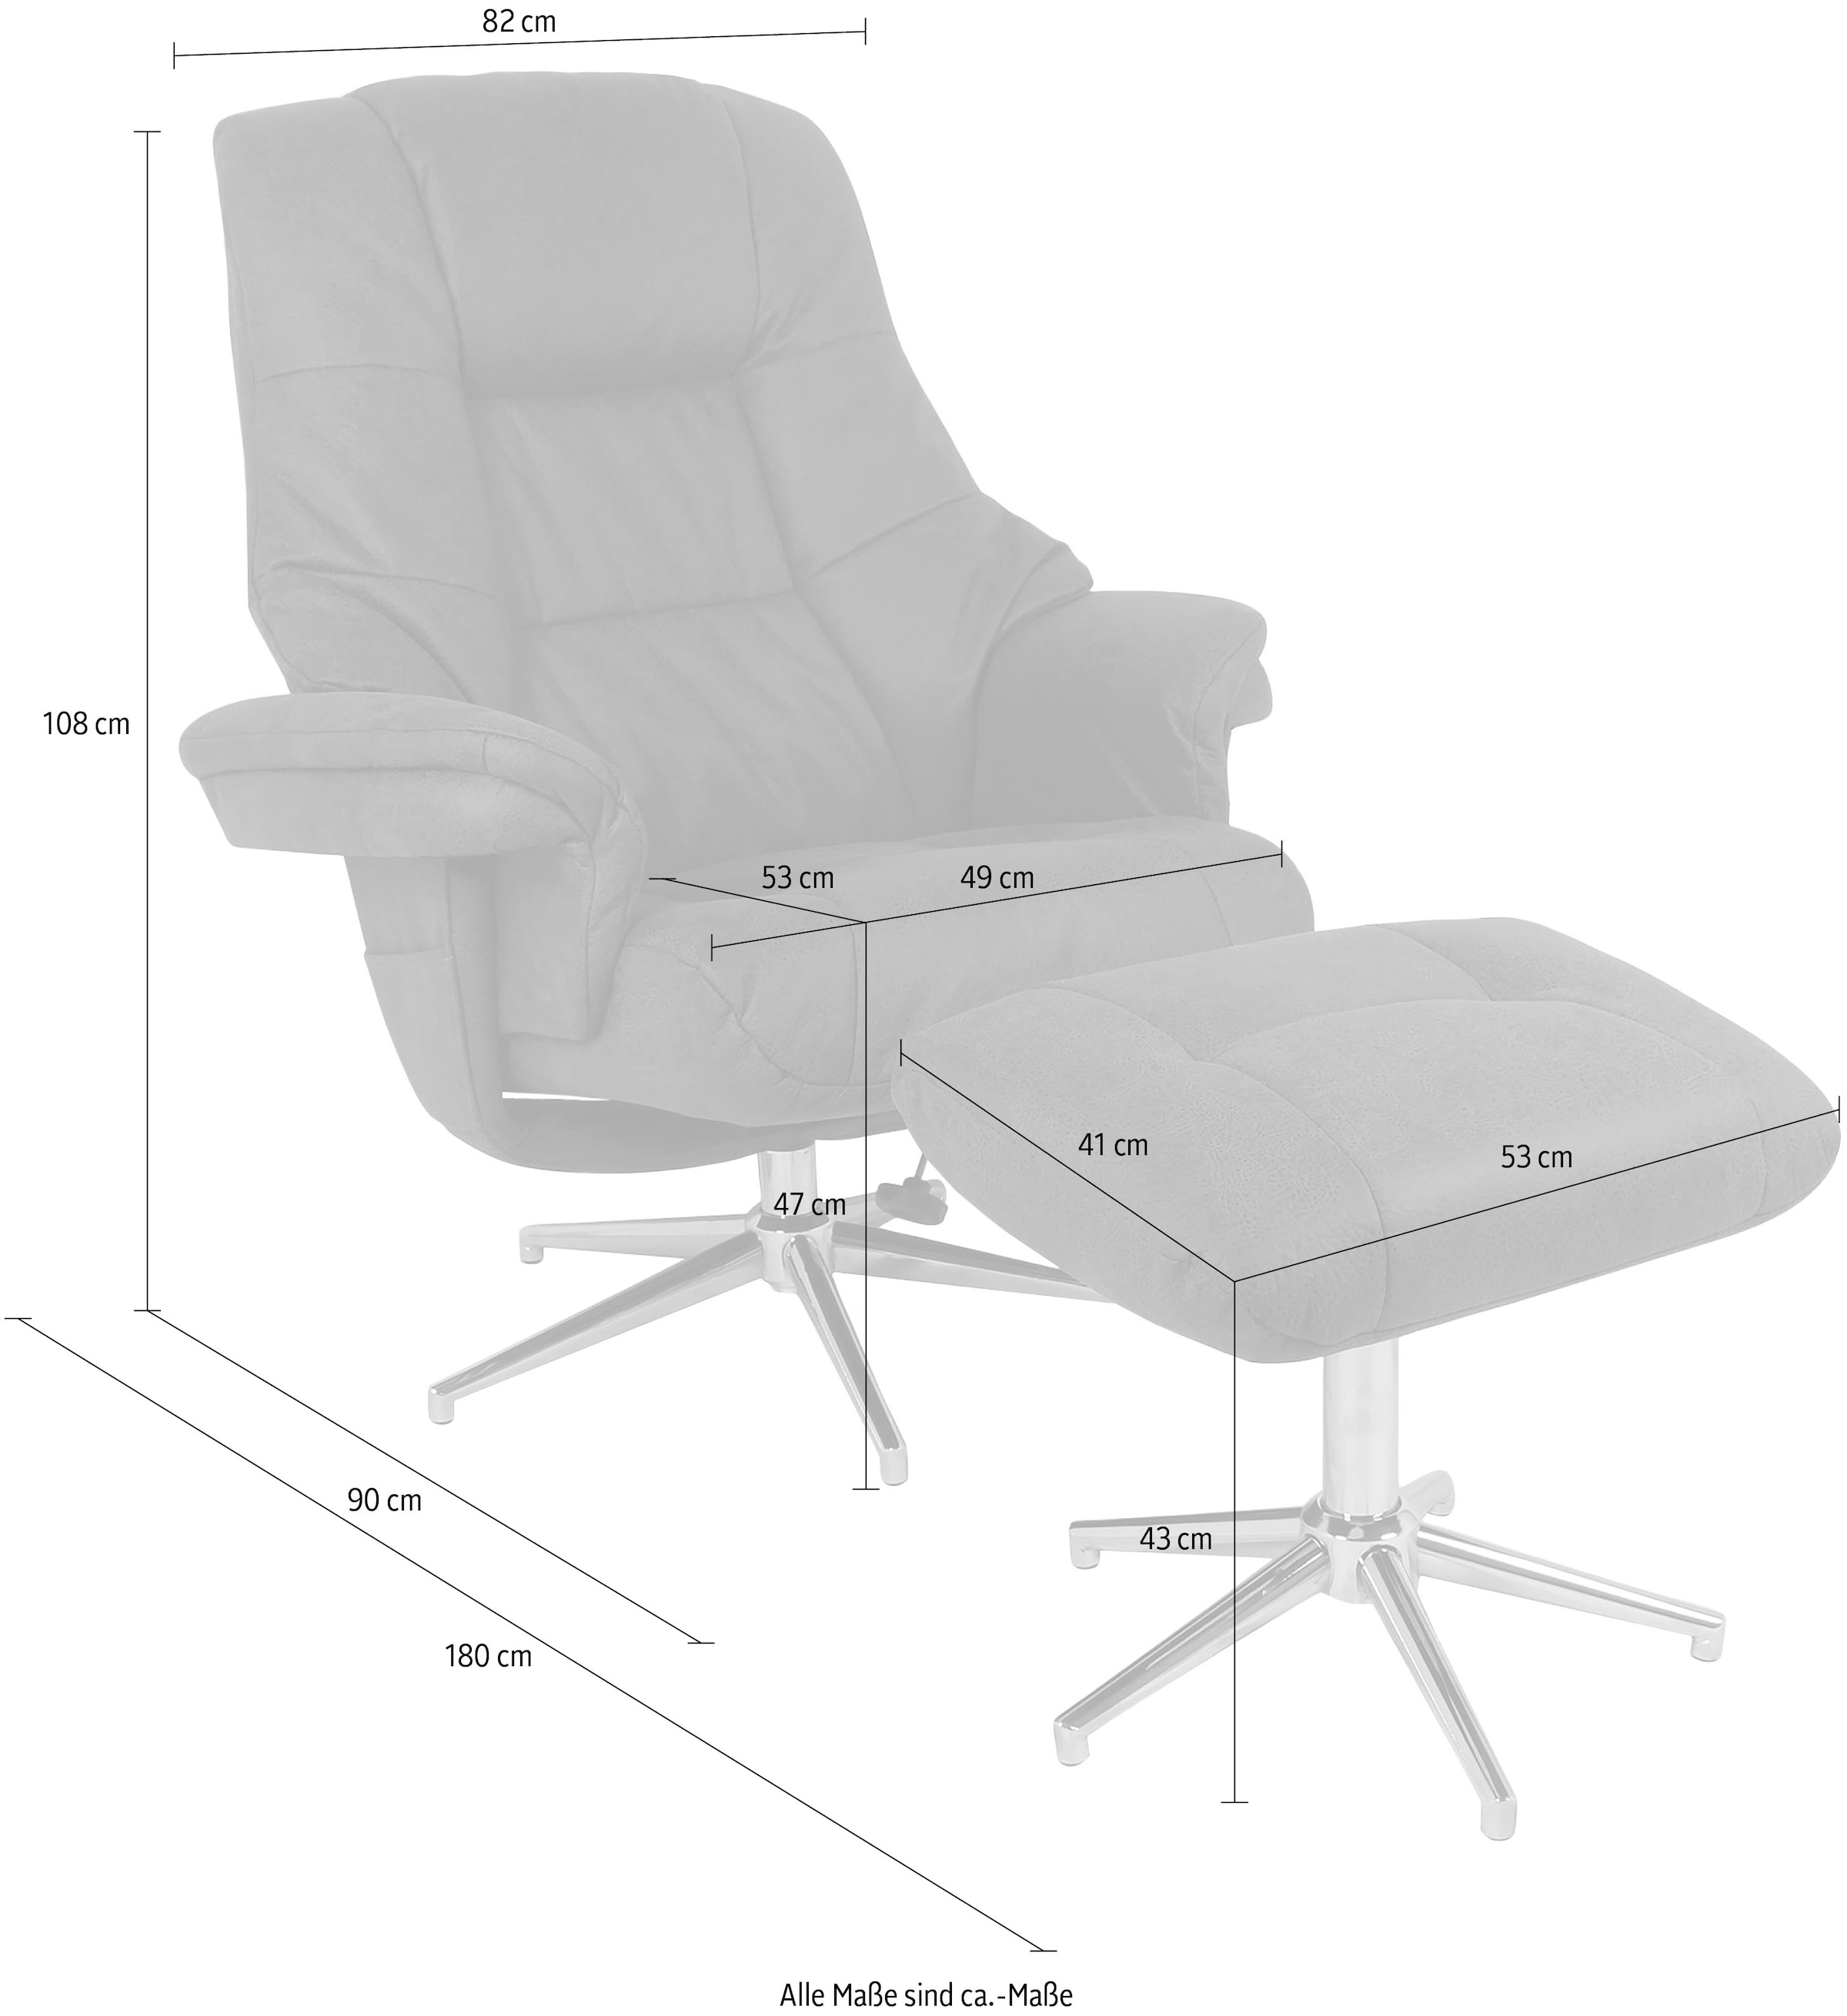 Duo Collection TV-Sessel »Burnaby«, mit Hocker und Relaxfunktion, 360 Grad drehbar